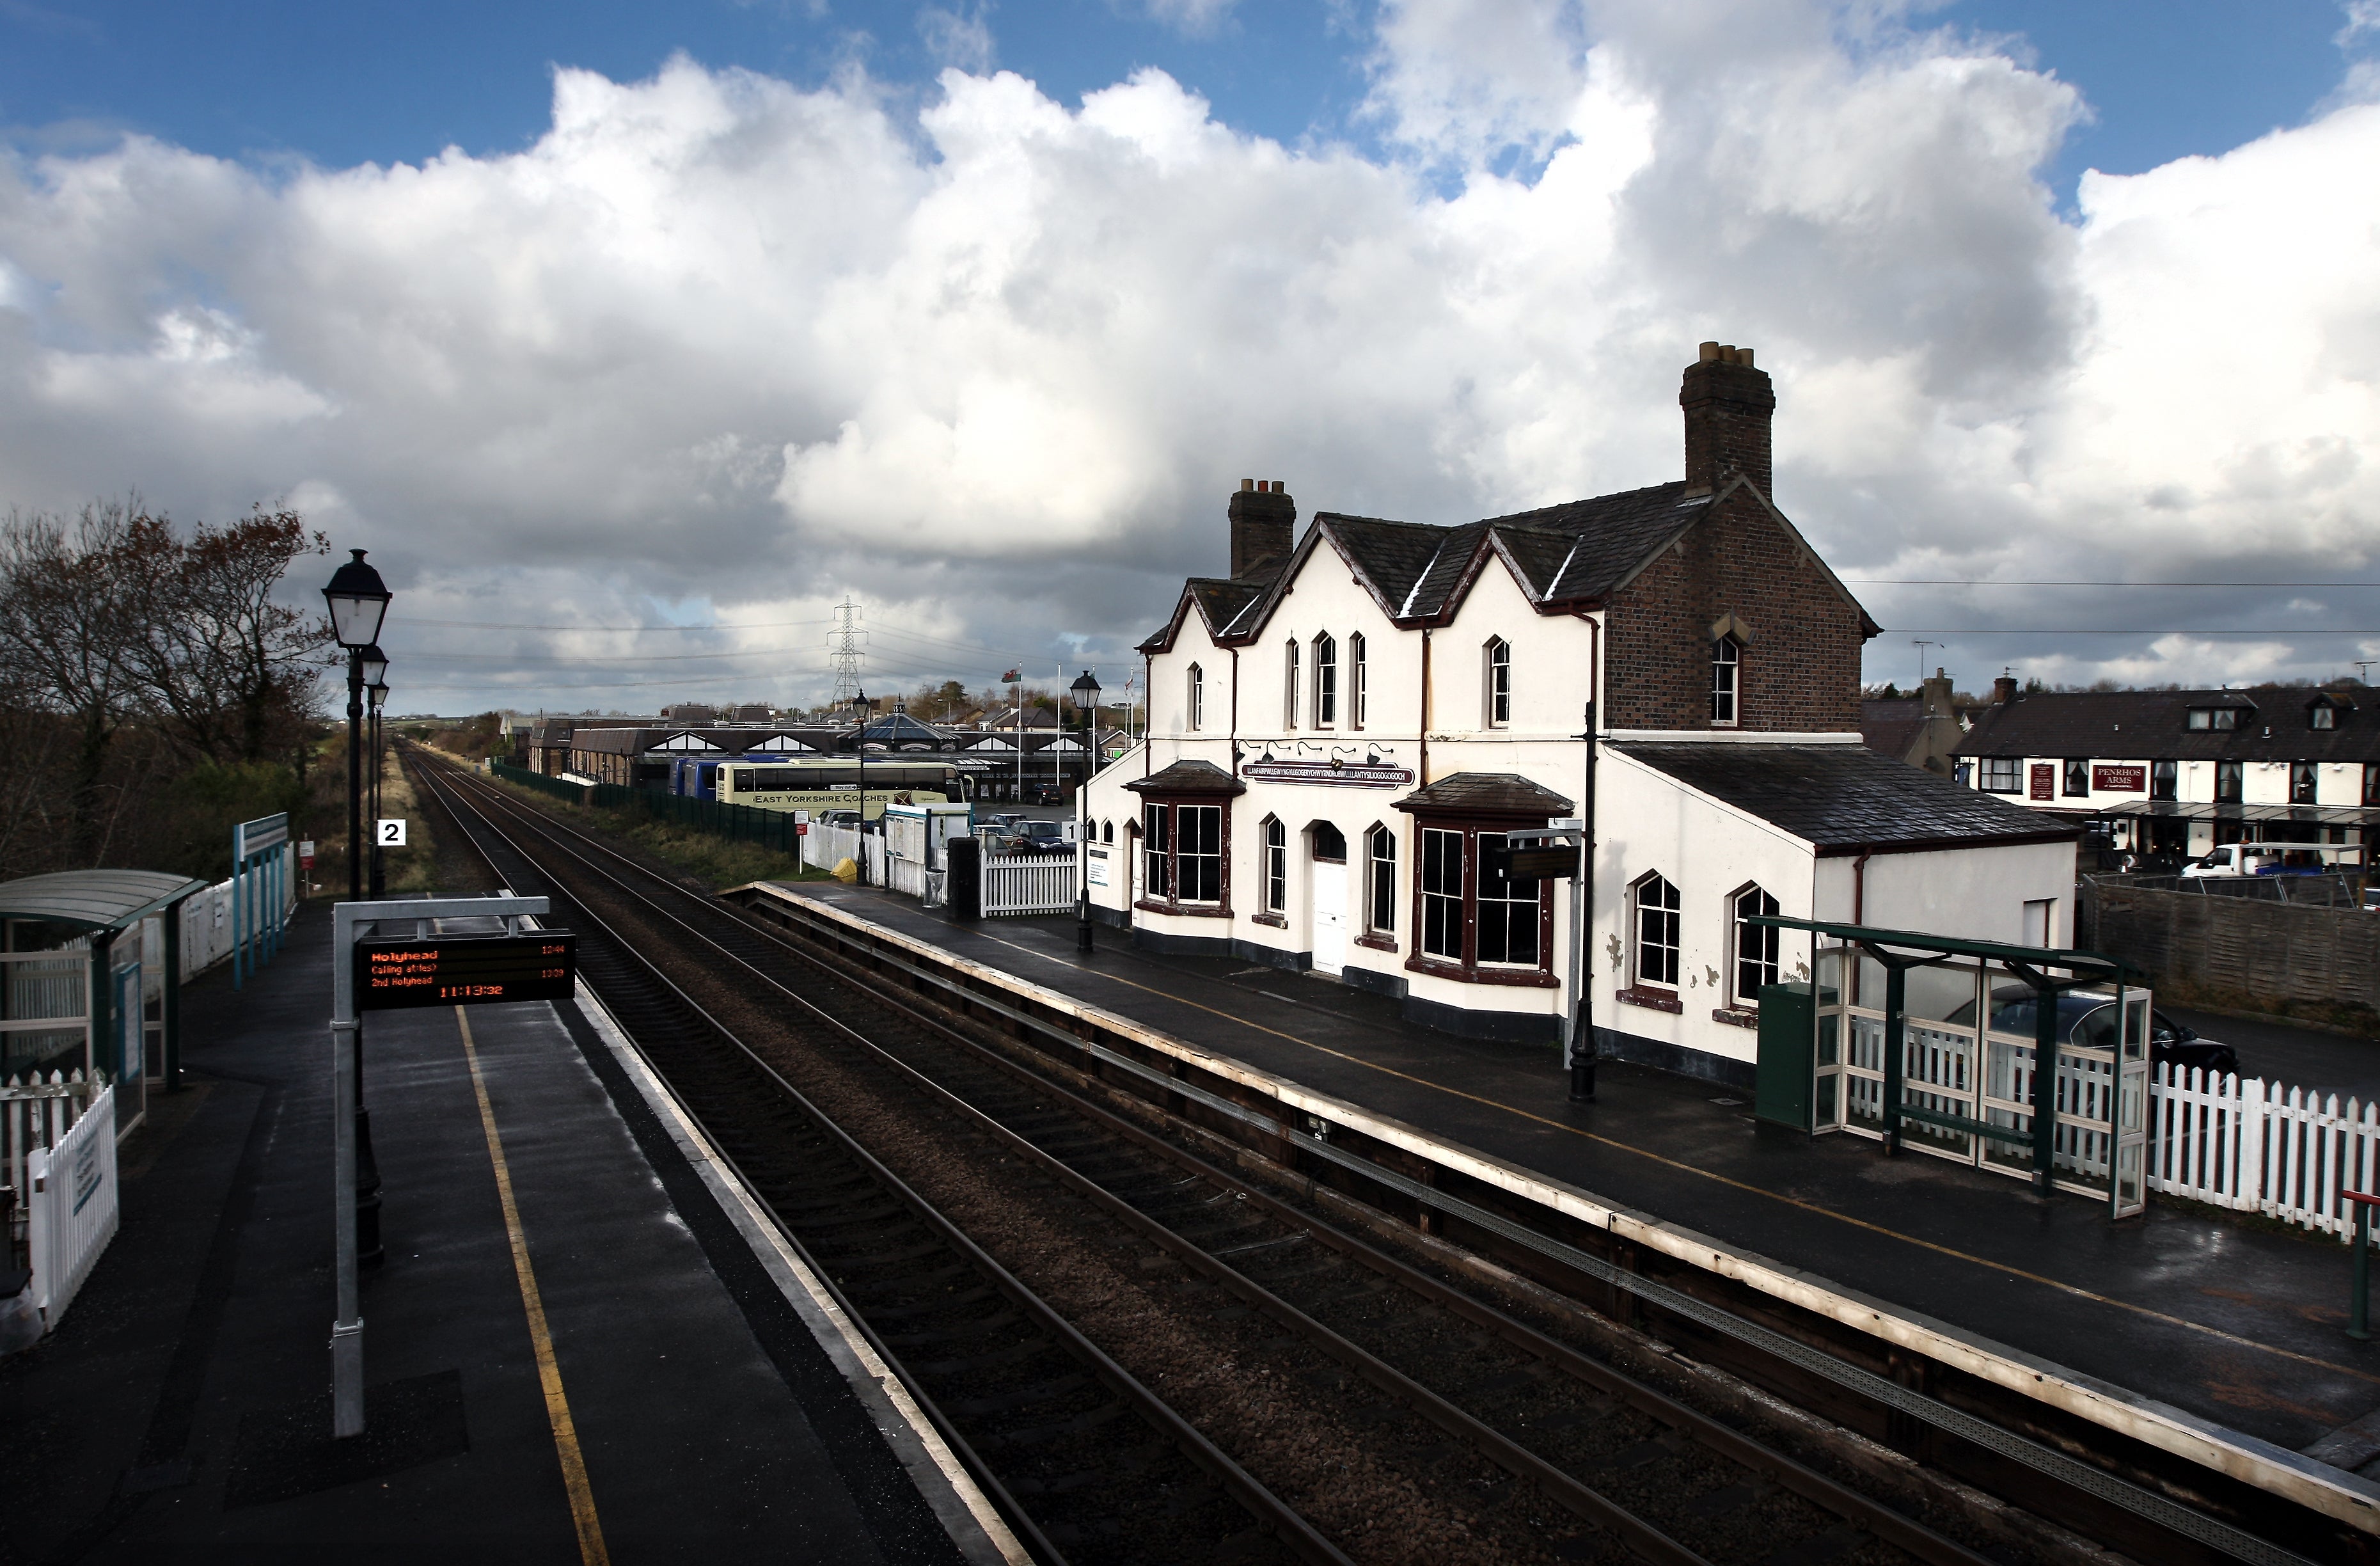 Llanfair PG station, Anglesey (David Jones/PA)